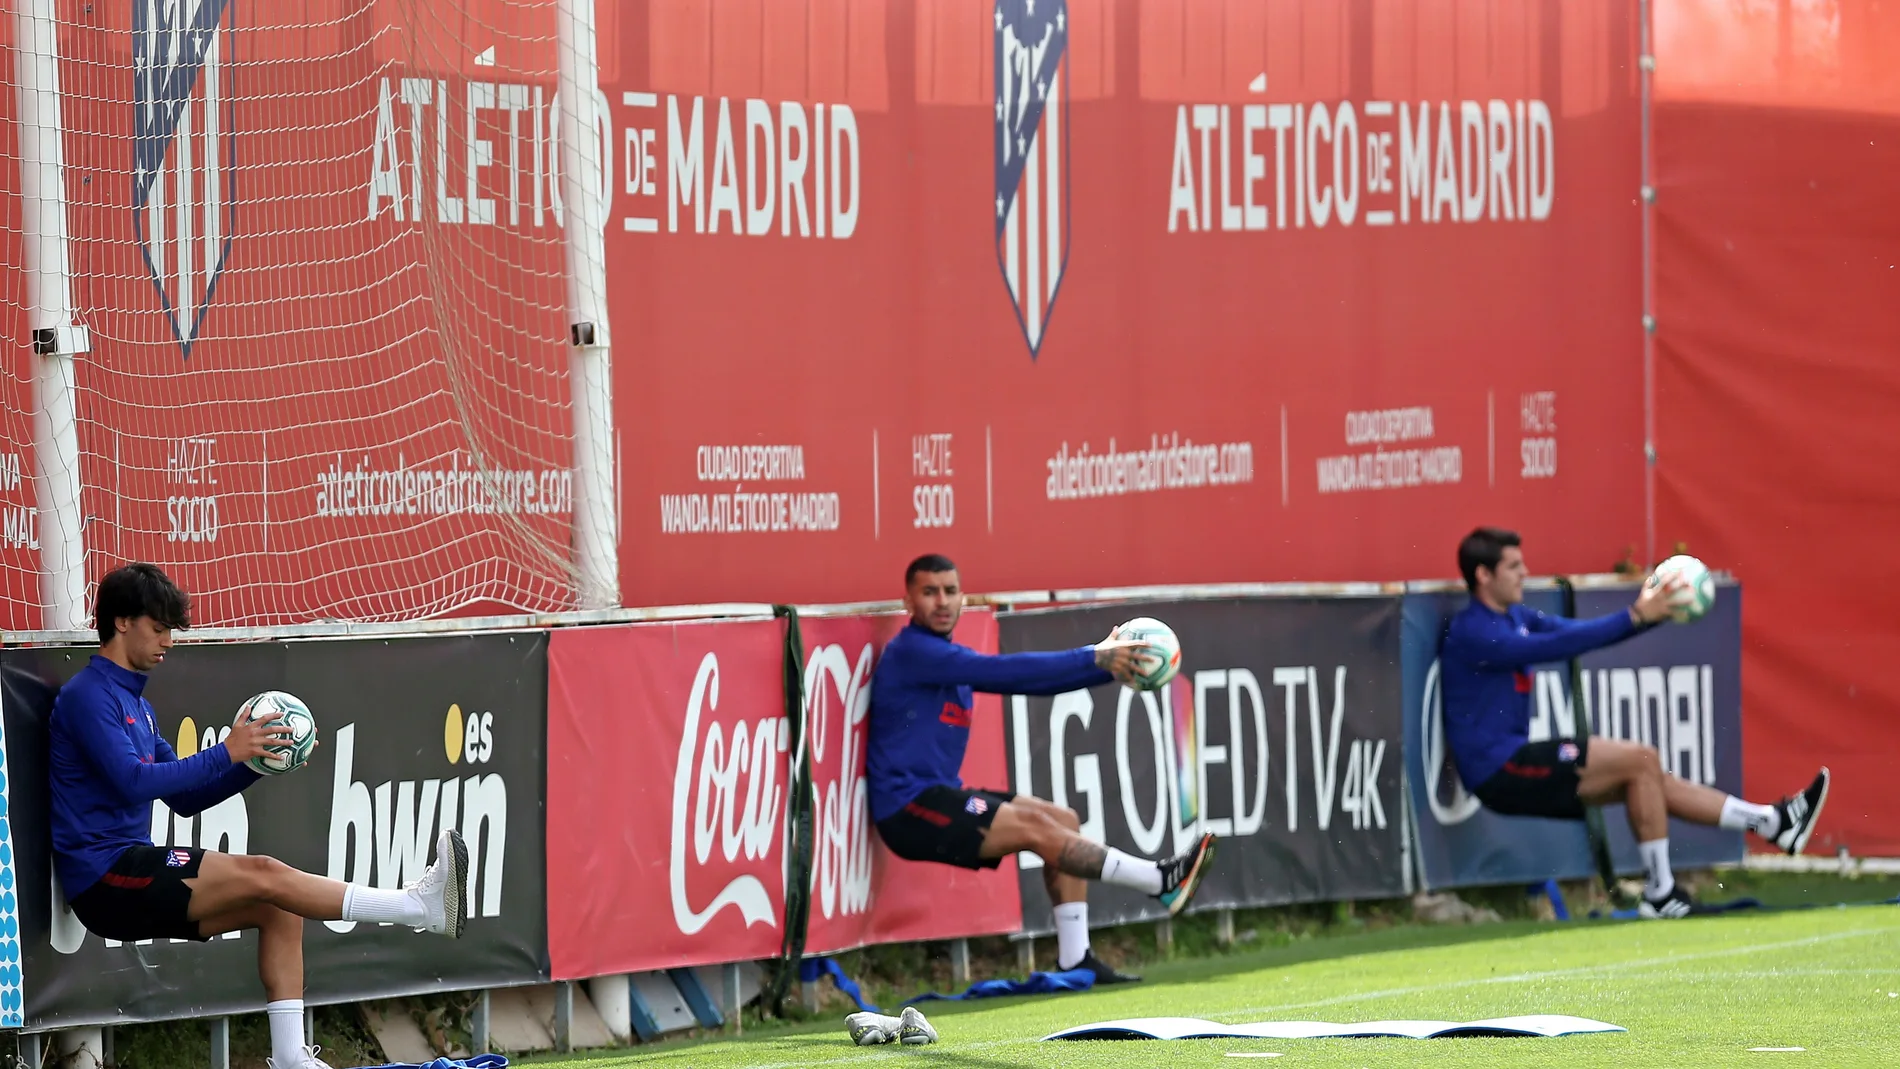 Atletico Madrid's training session